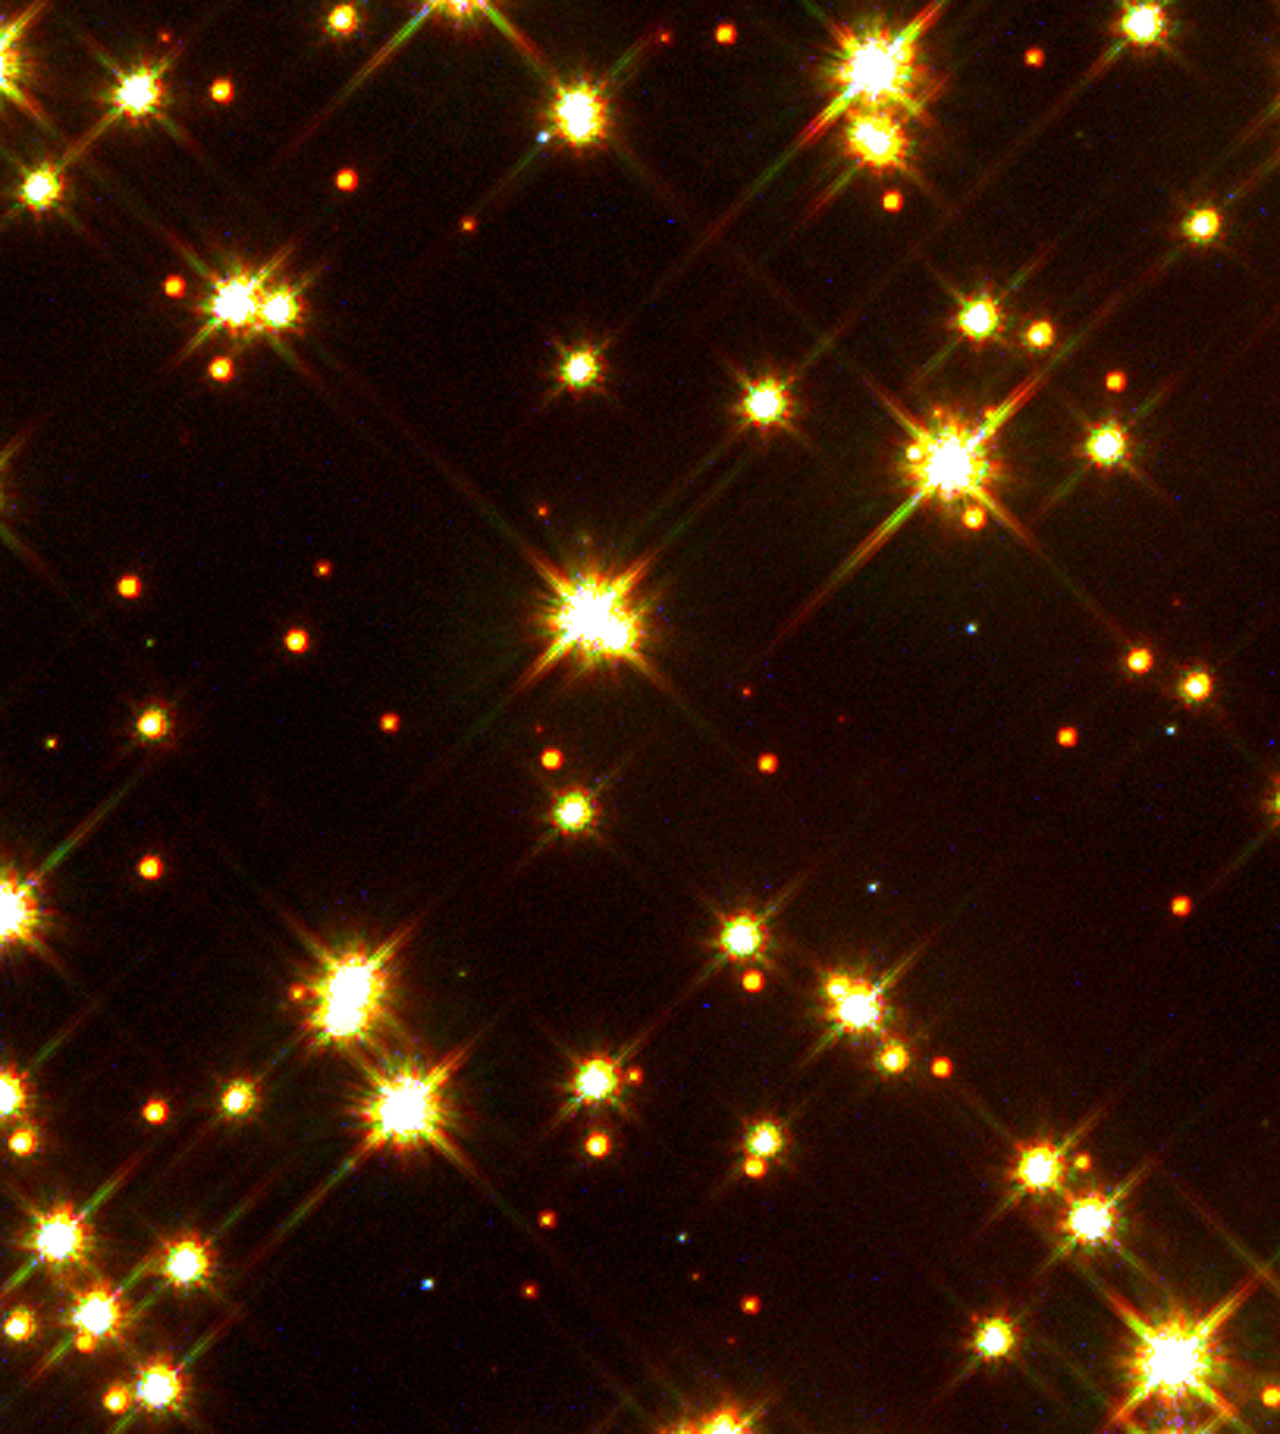 White Dwarf Stars in M4 | ESA/Hubble